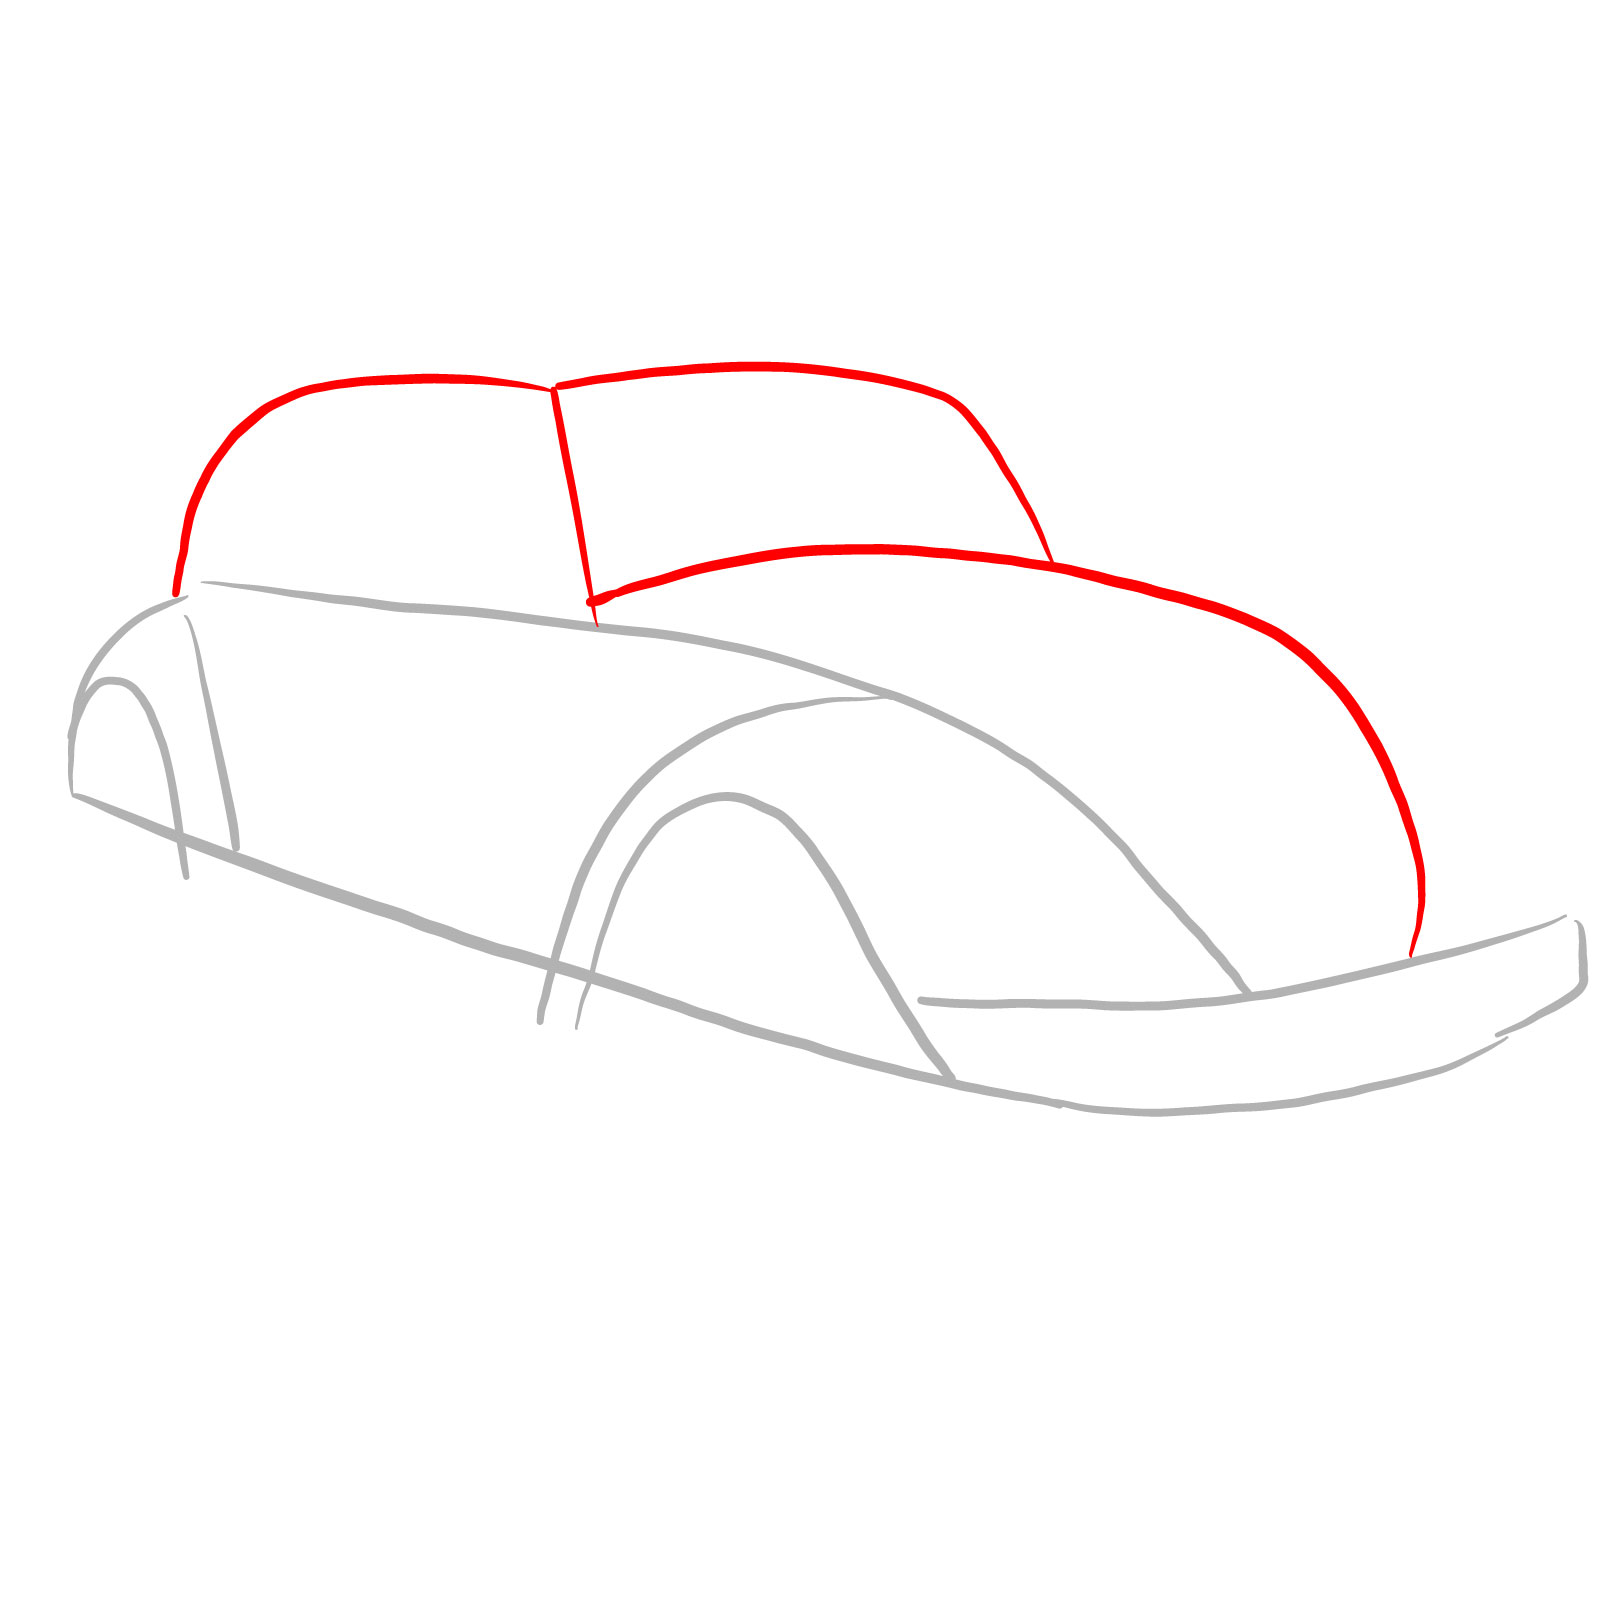 How to draw Volkswagen Beetle 1972 - step 02